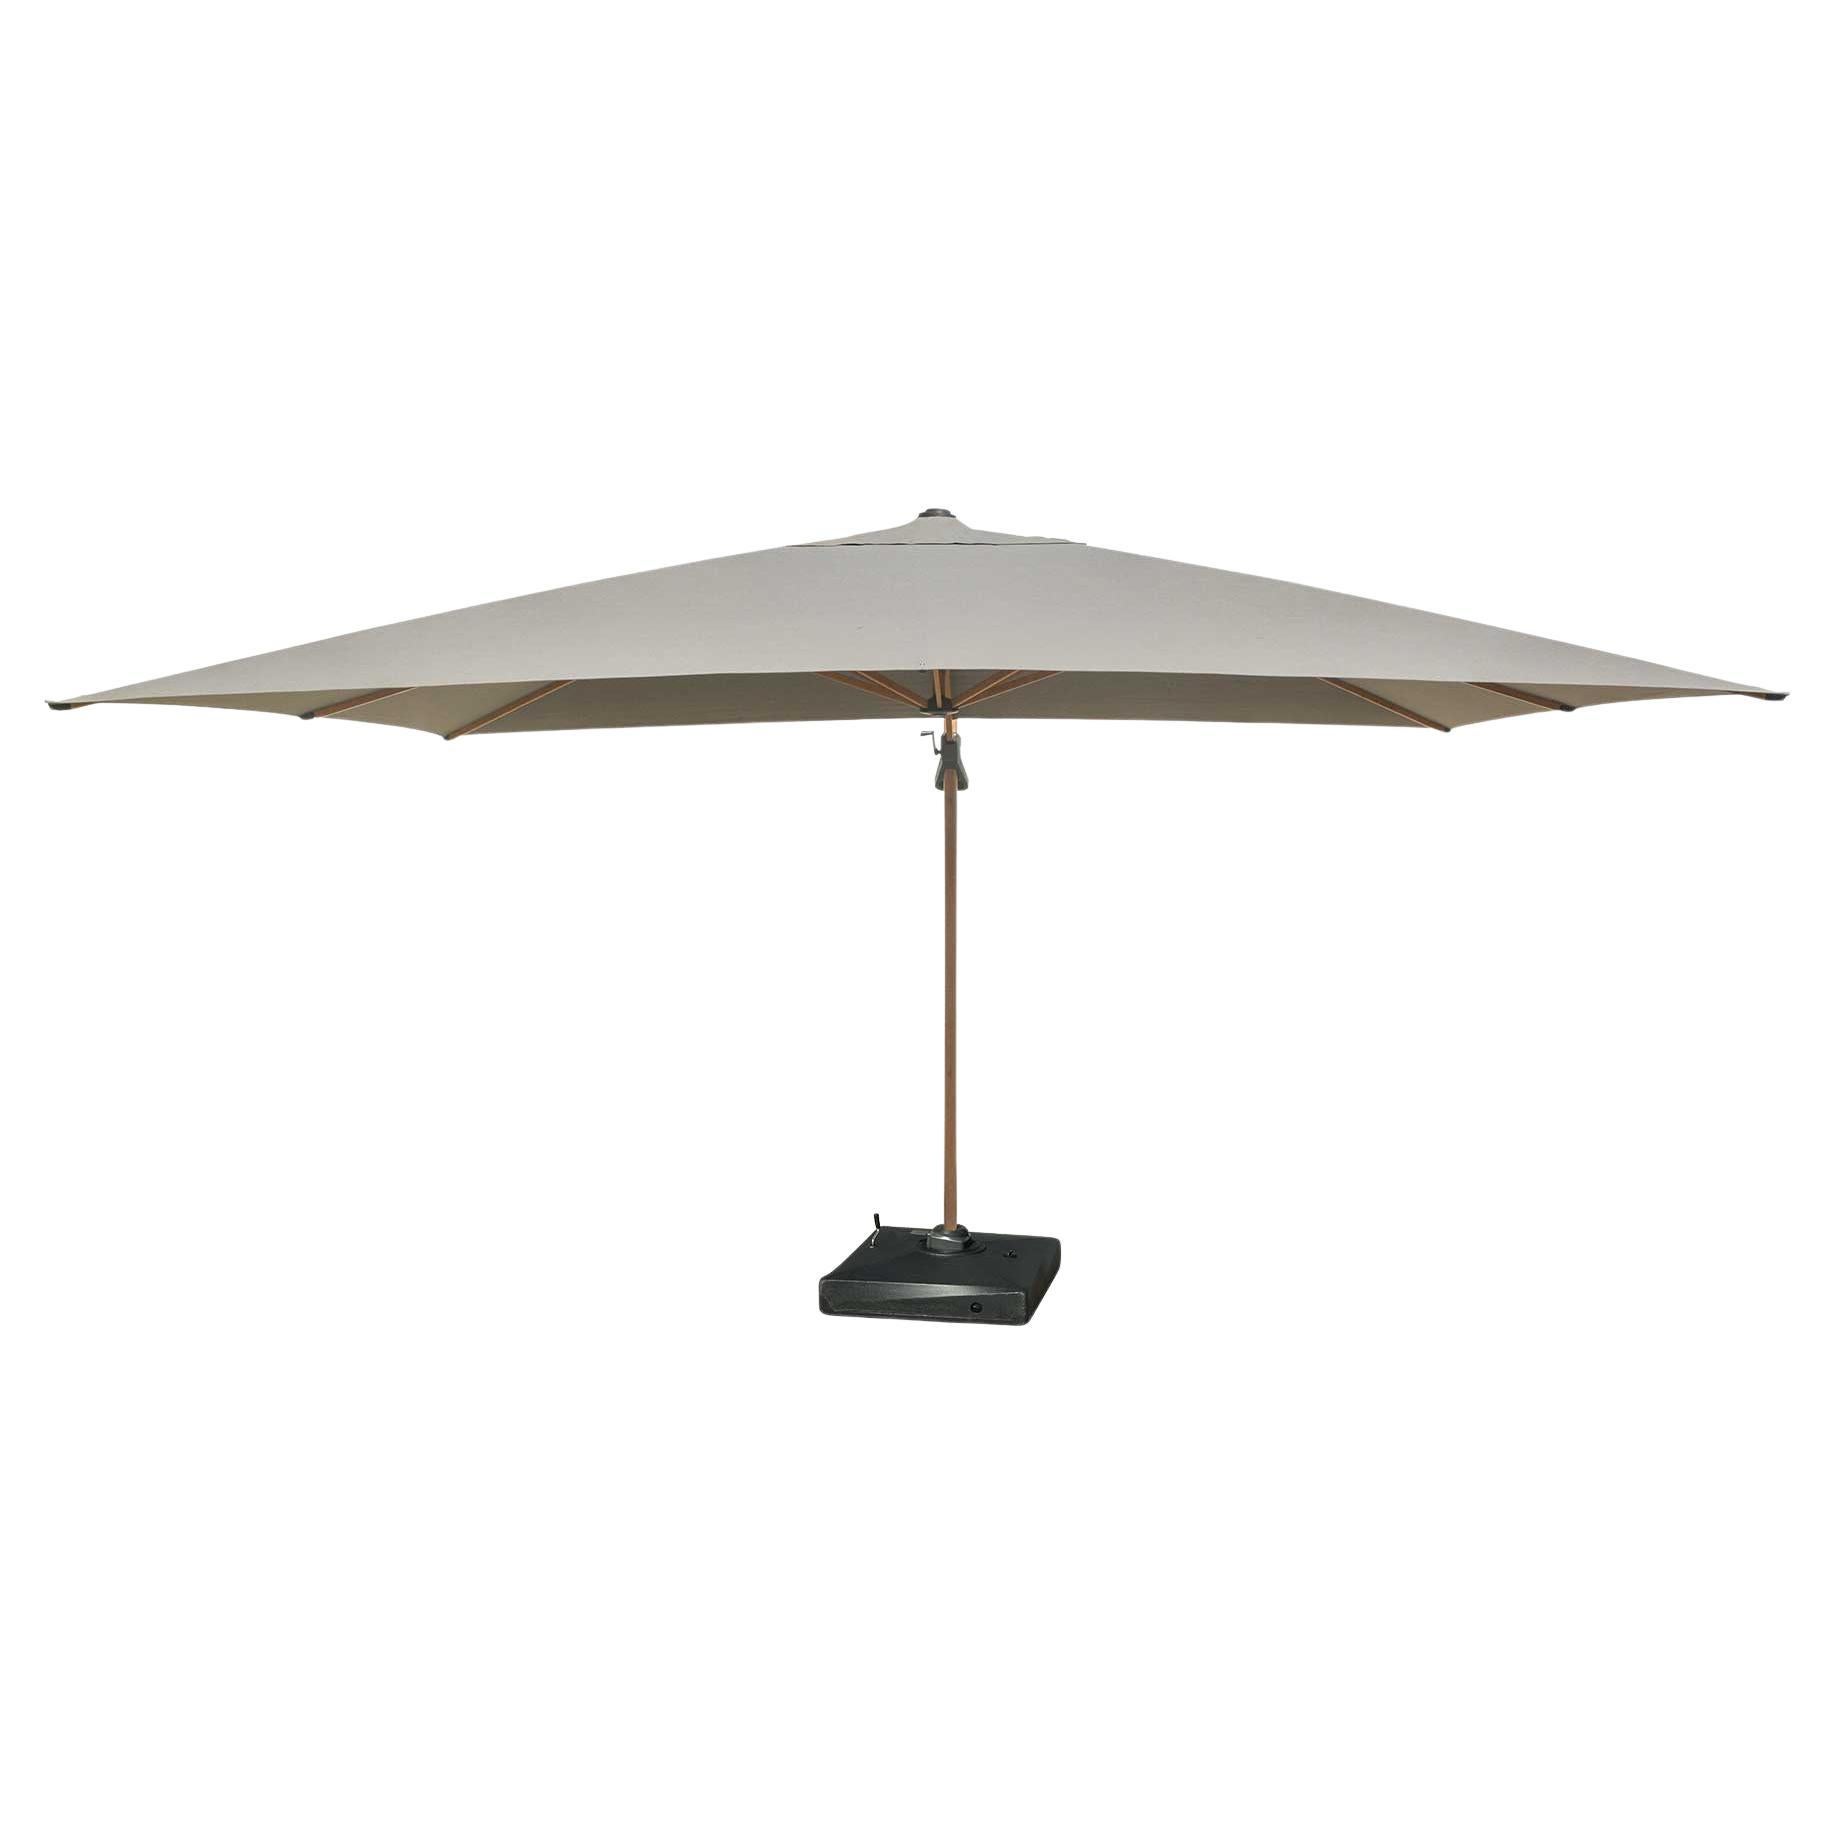 Claude Beige XL Umbrella by Snoc